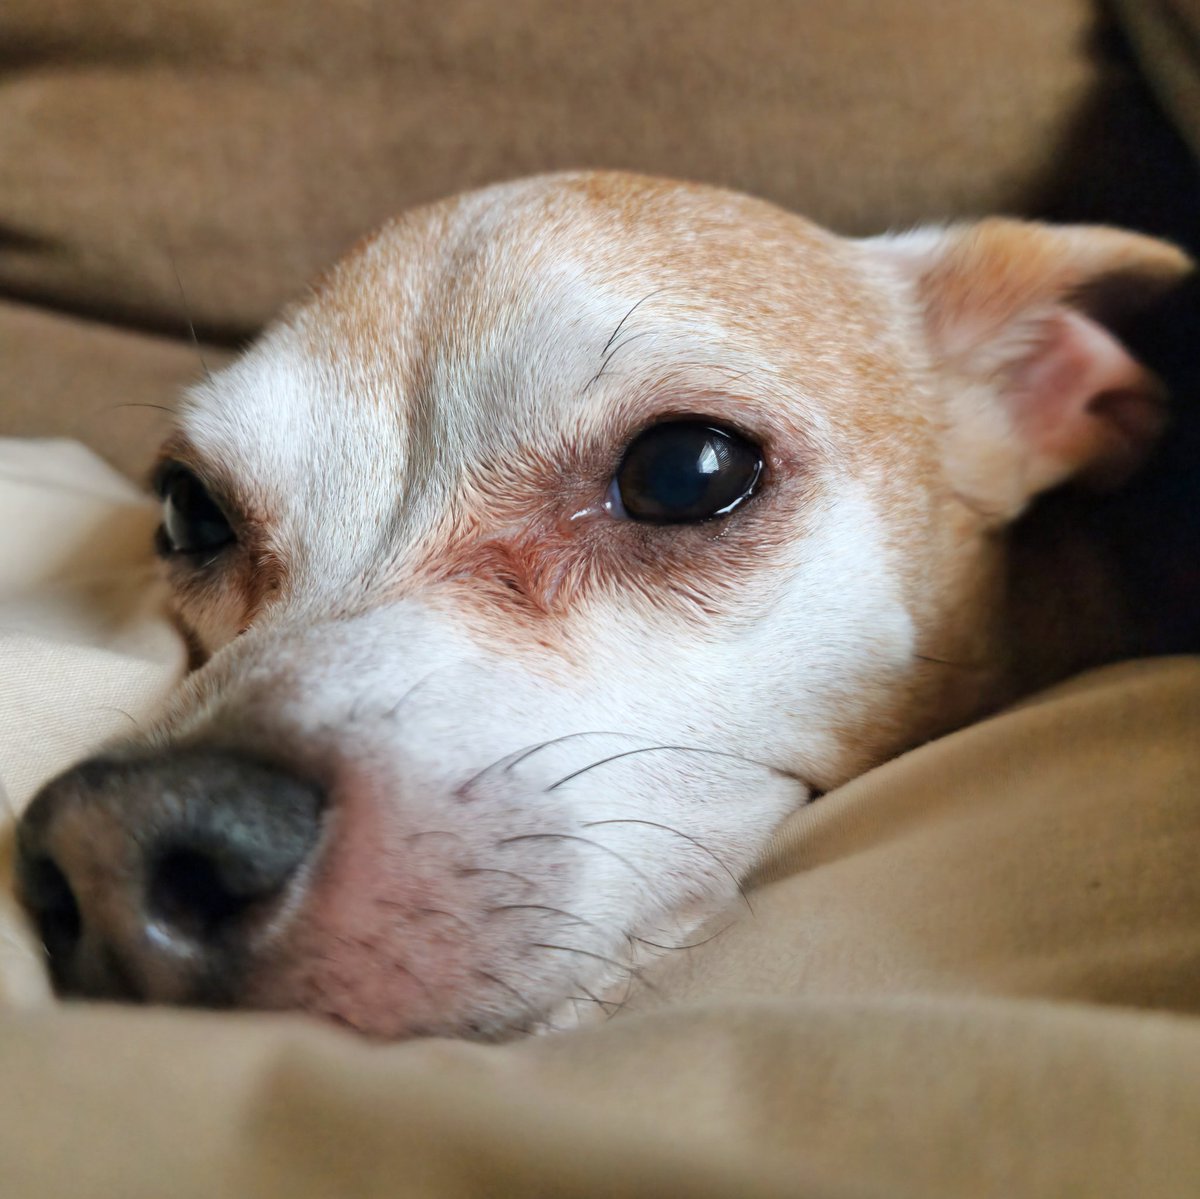 Morning Nelly

#dog #dogs #dogsofinstagram #nelly #chihuahua #chihuahuas #chihuahuasofinstagram #goodmorning